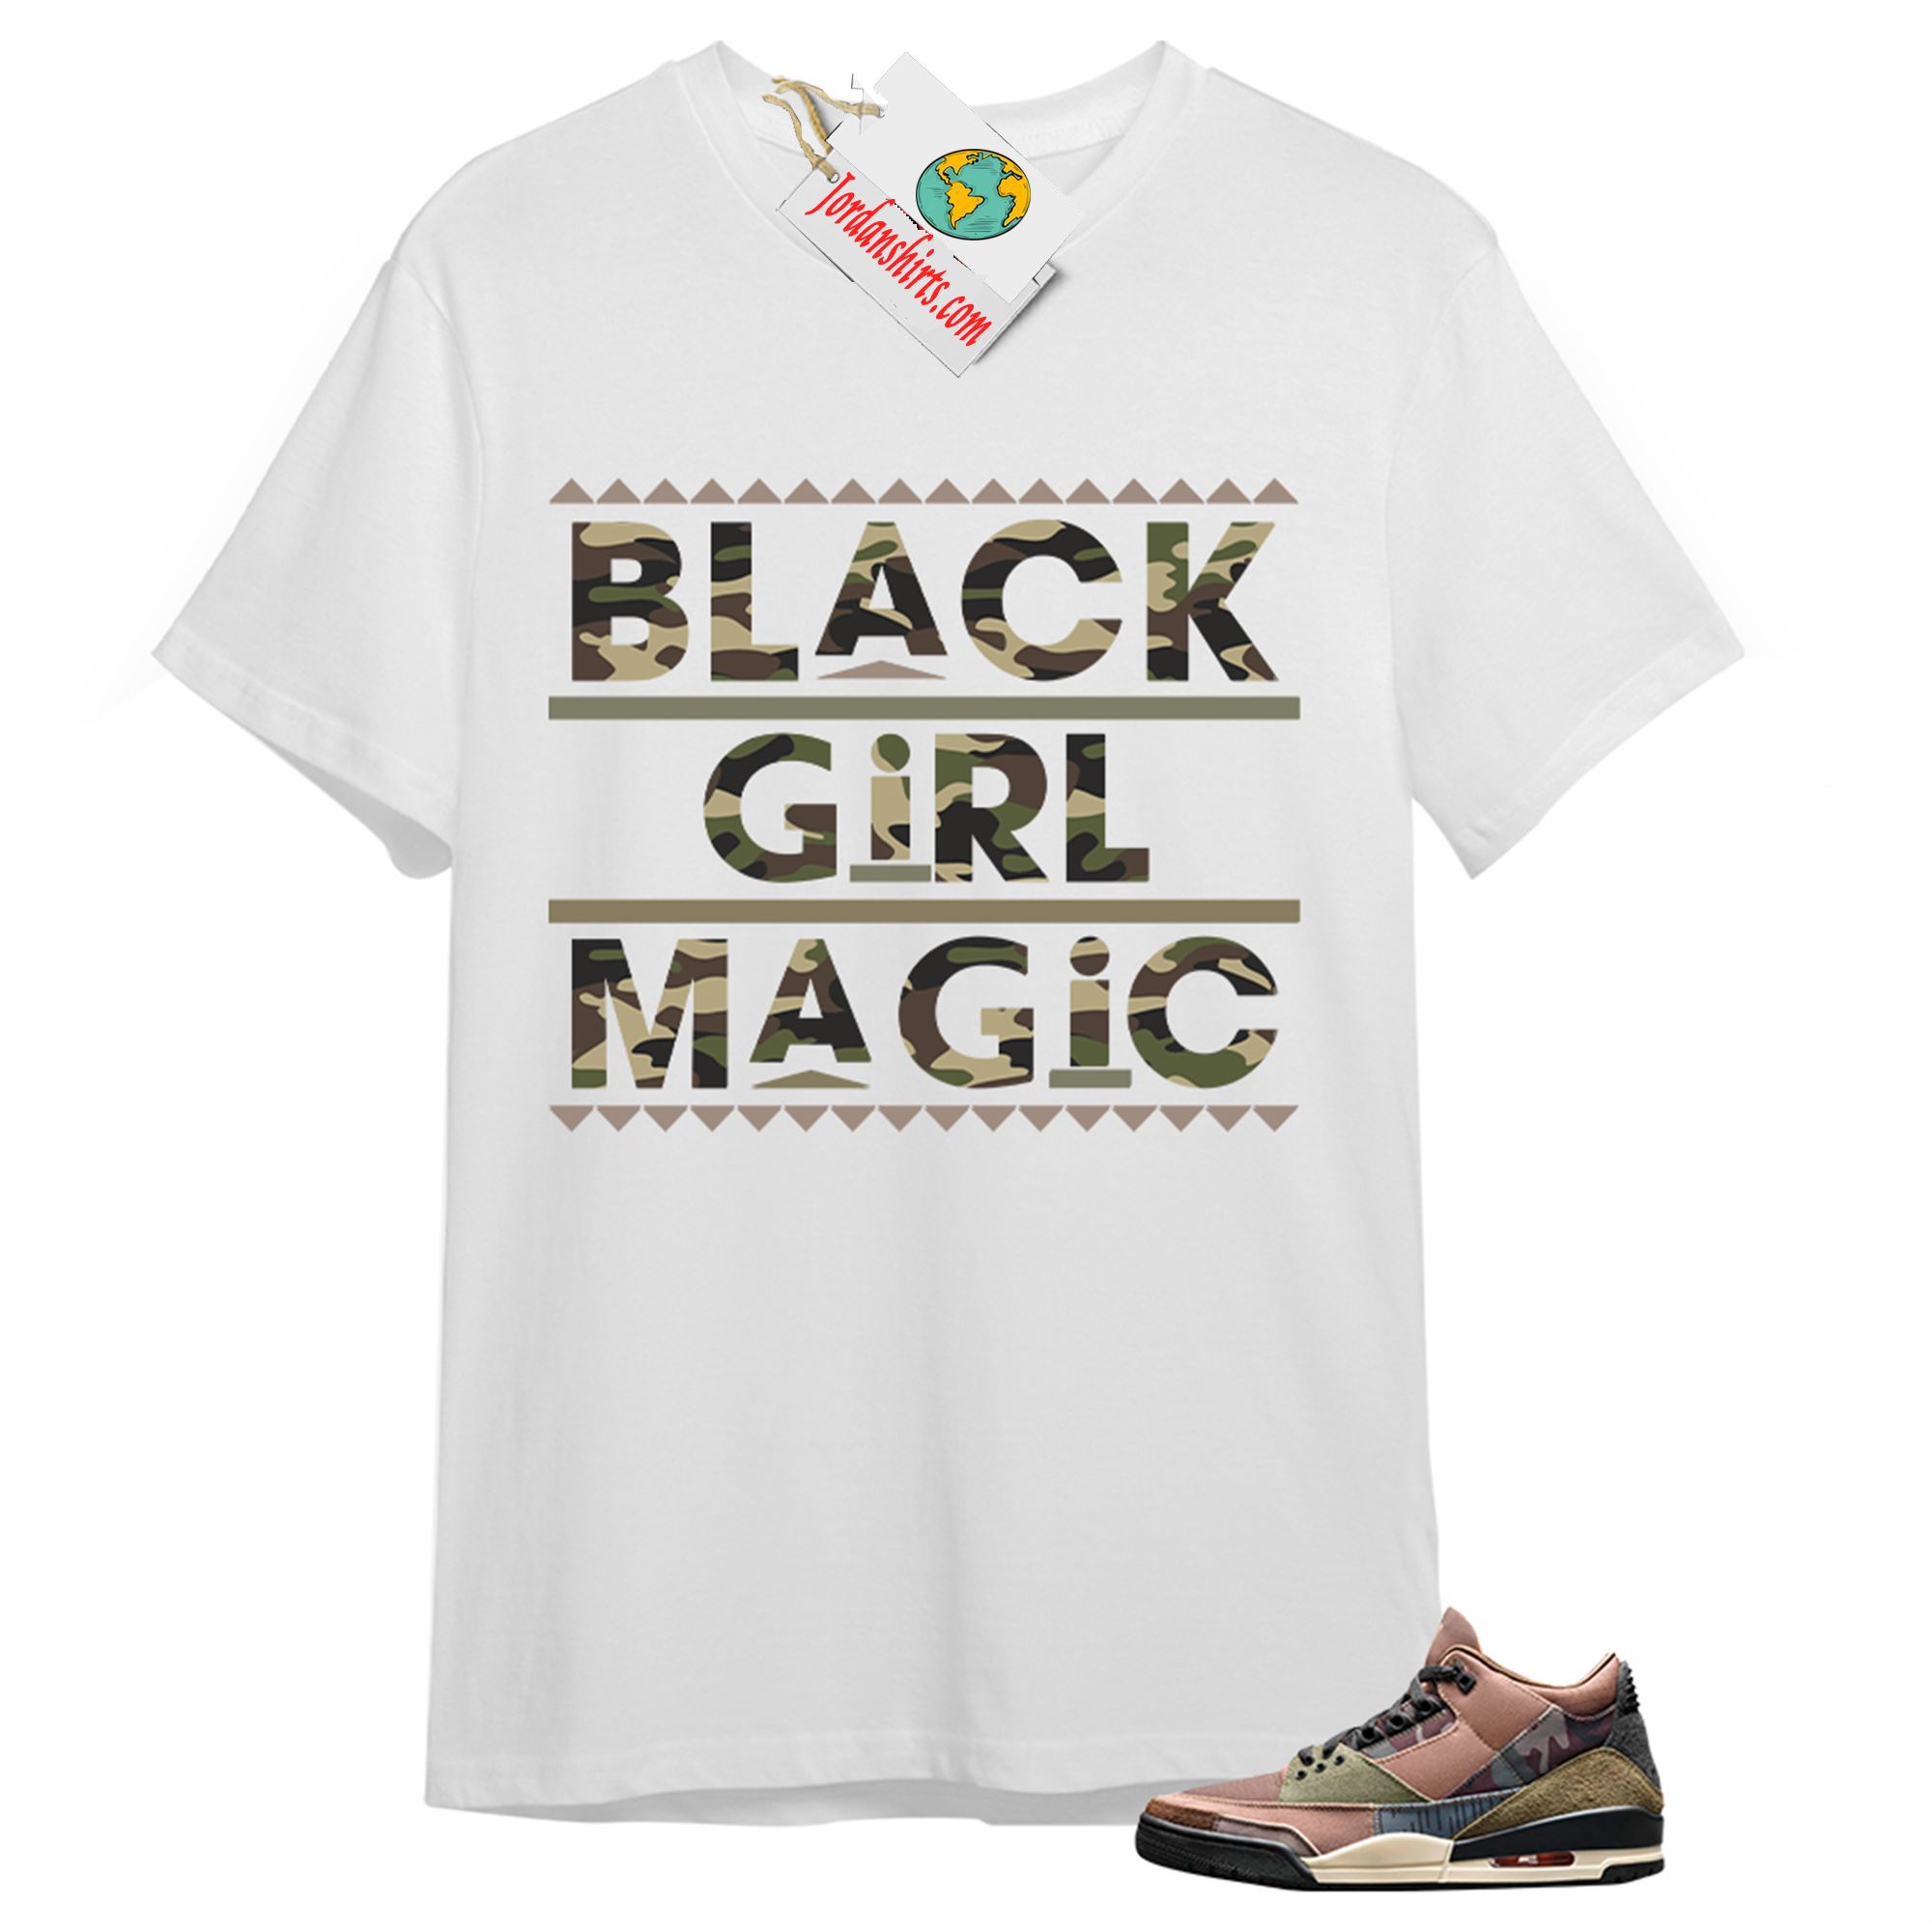 Jordan 3 Shirt, Black Girl Magic White T-shirt Air Jordan 3 Camo 3s Plus Size Up To 5xl